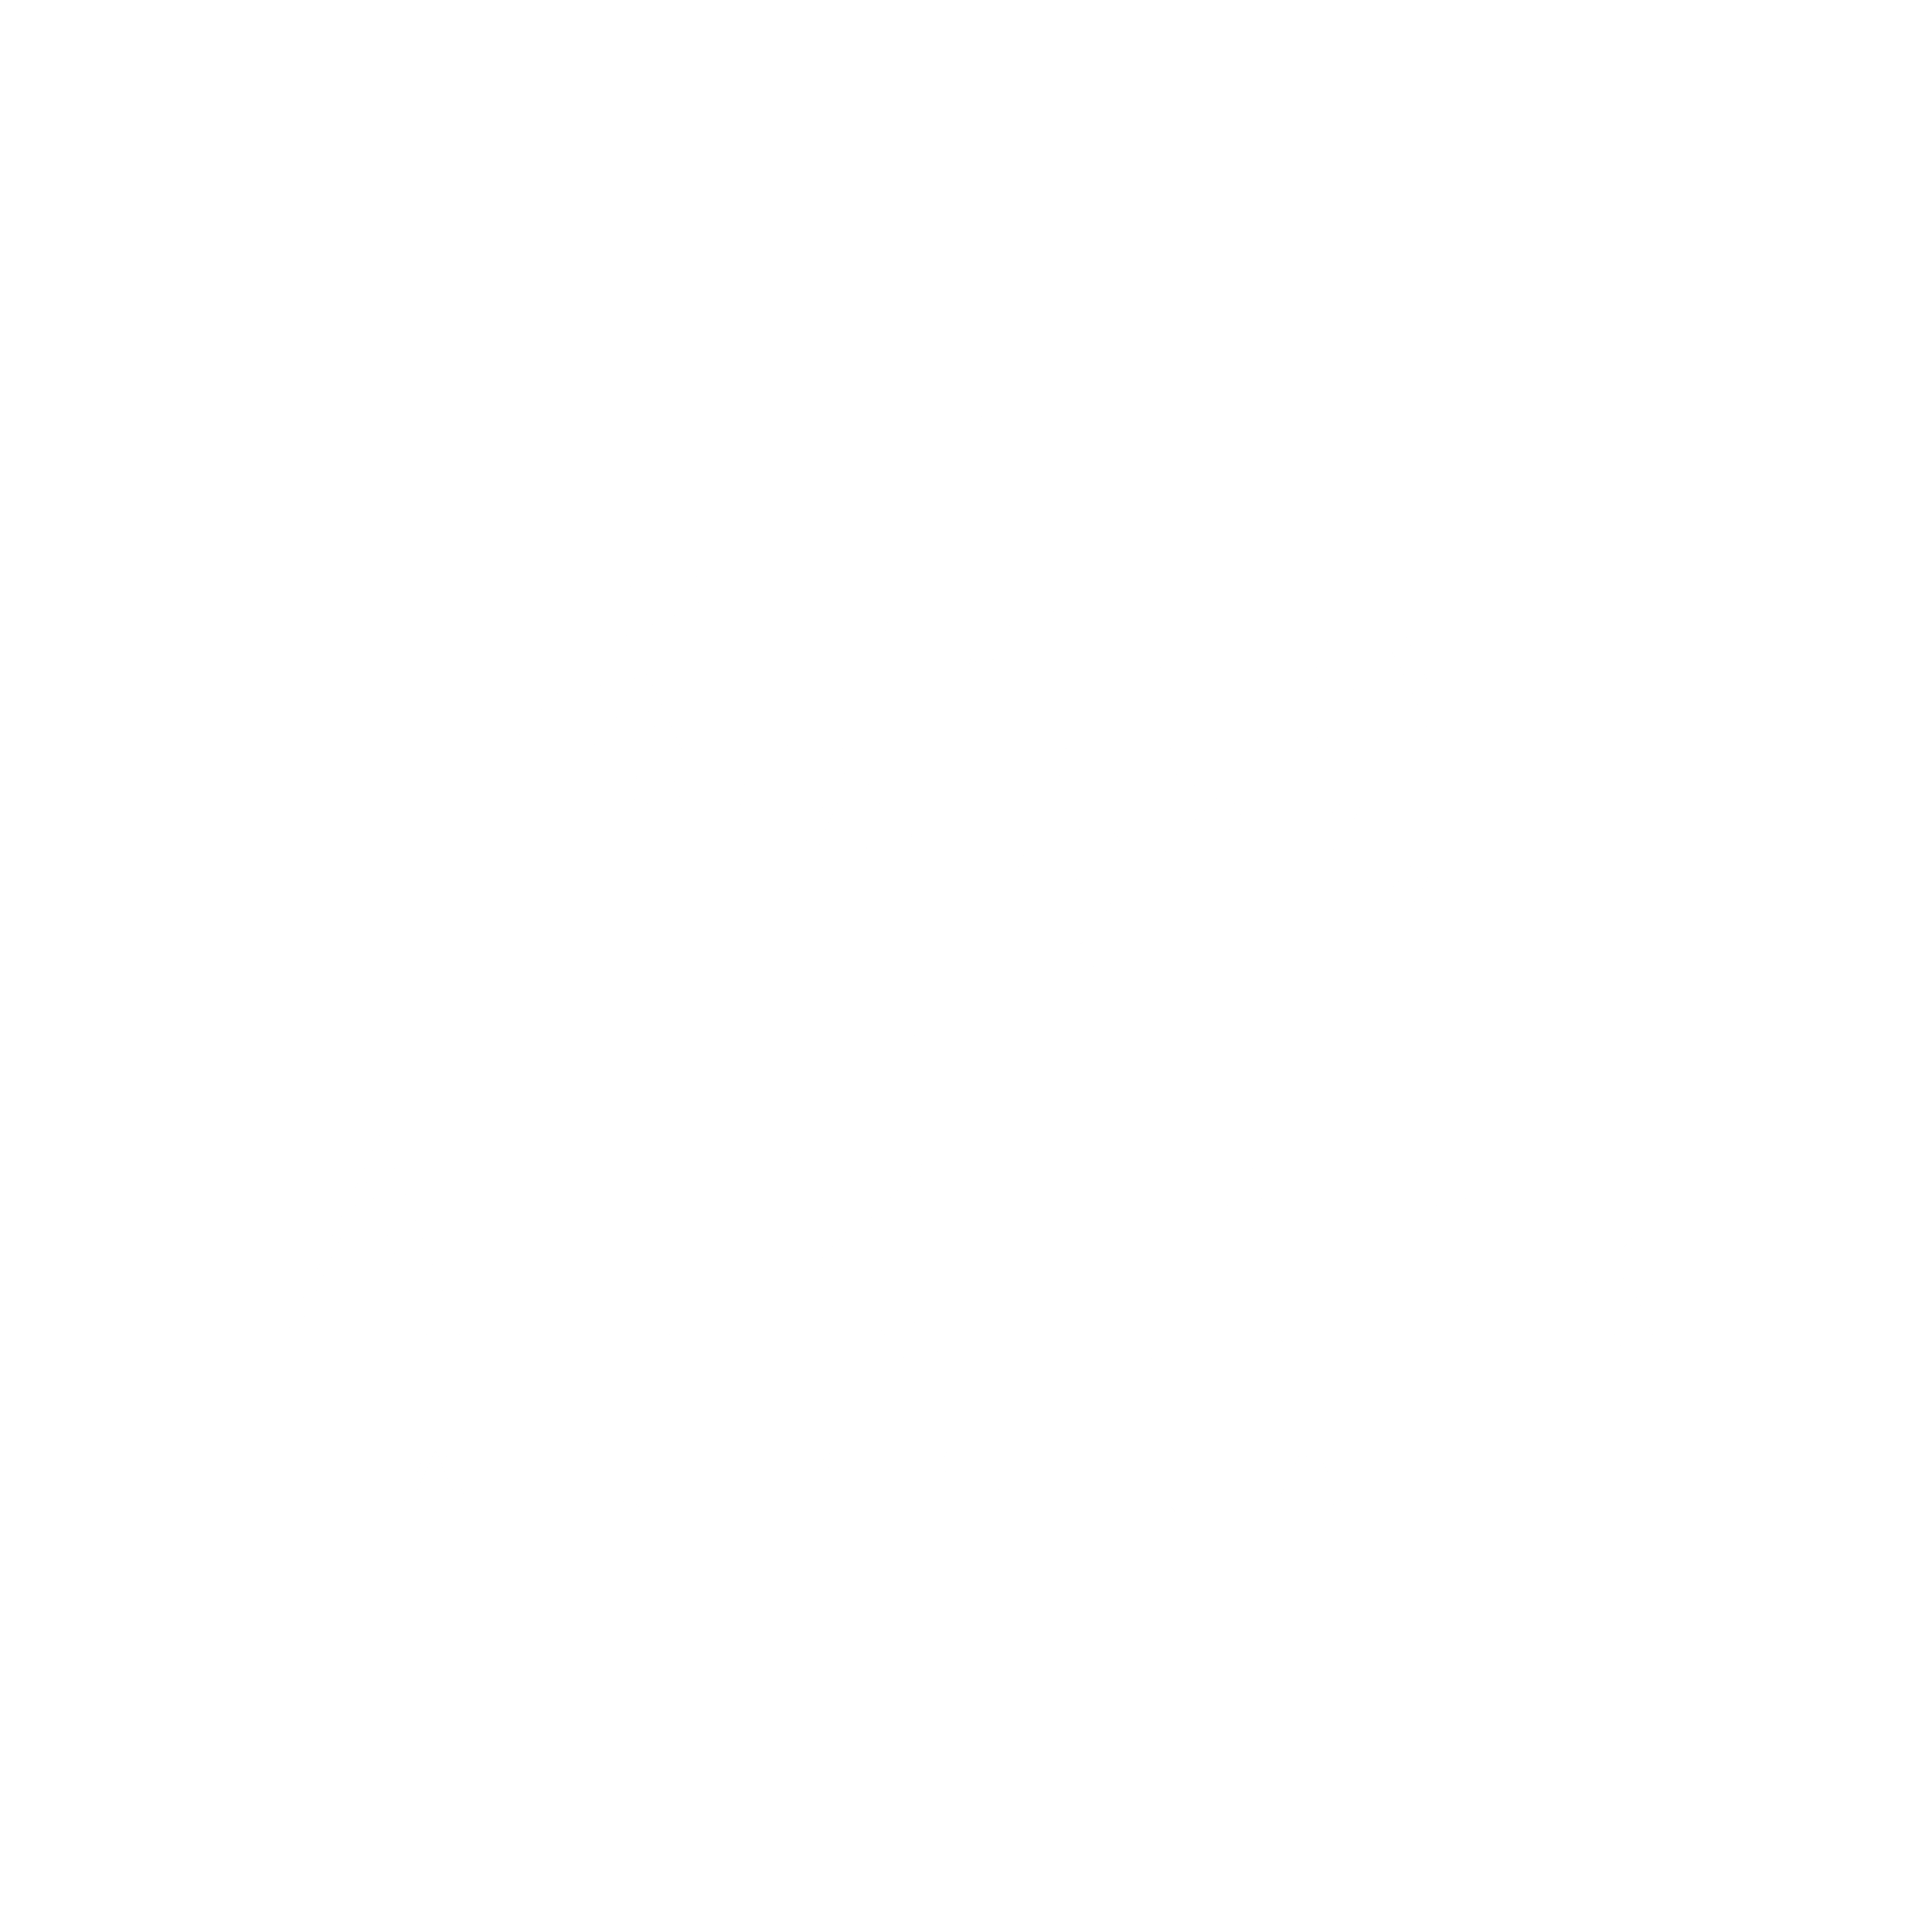 Landscaping companies in Dubai